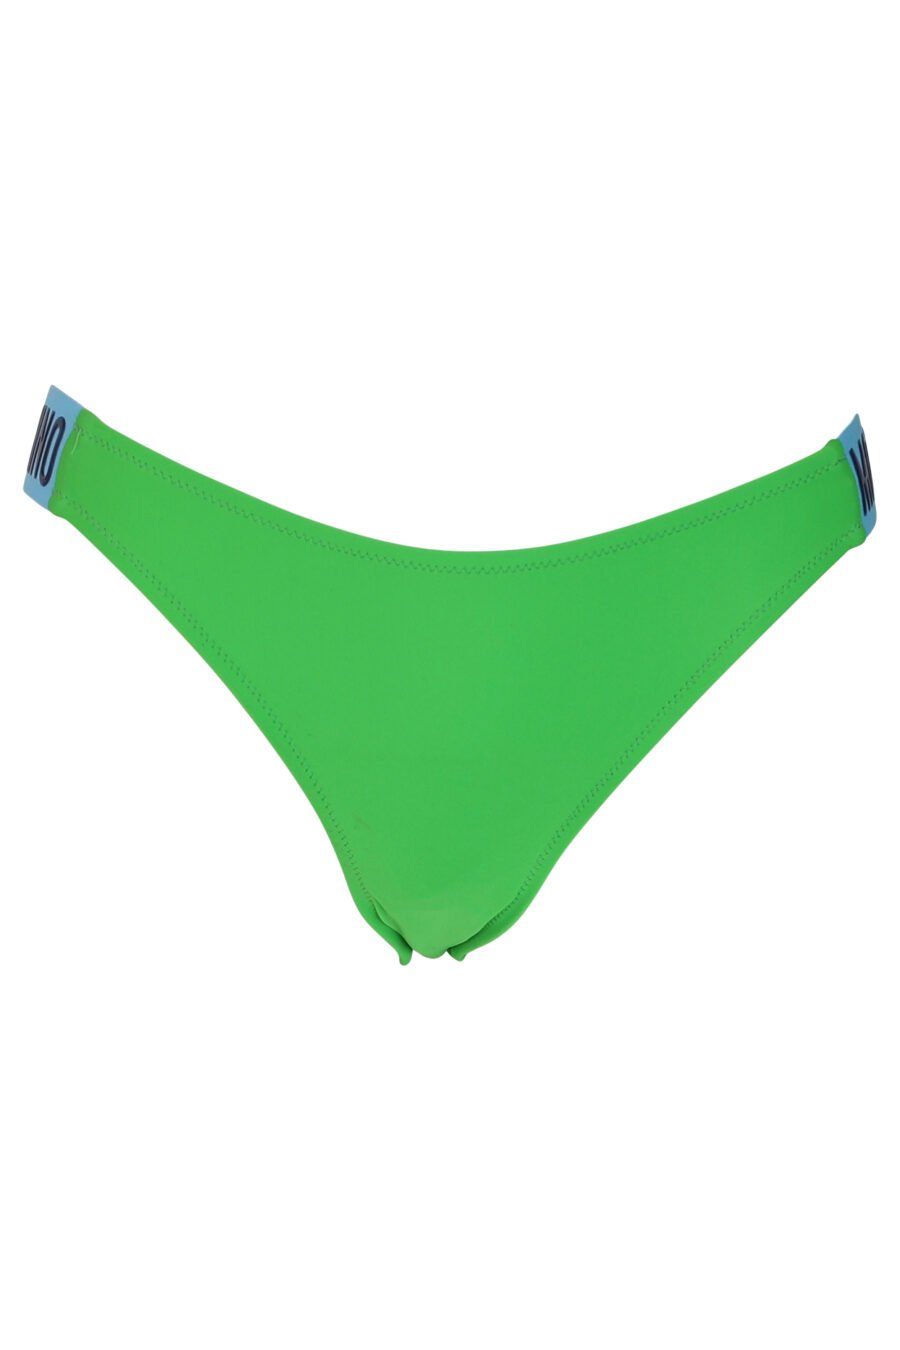 Bas de bikini vert avec logo sur la bande latérale - IMG 0312